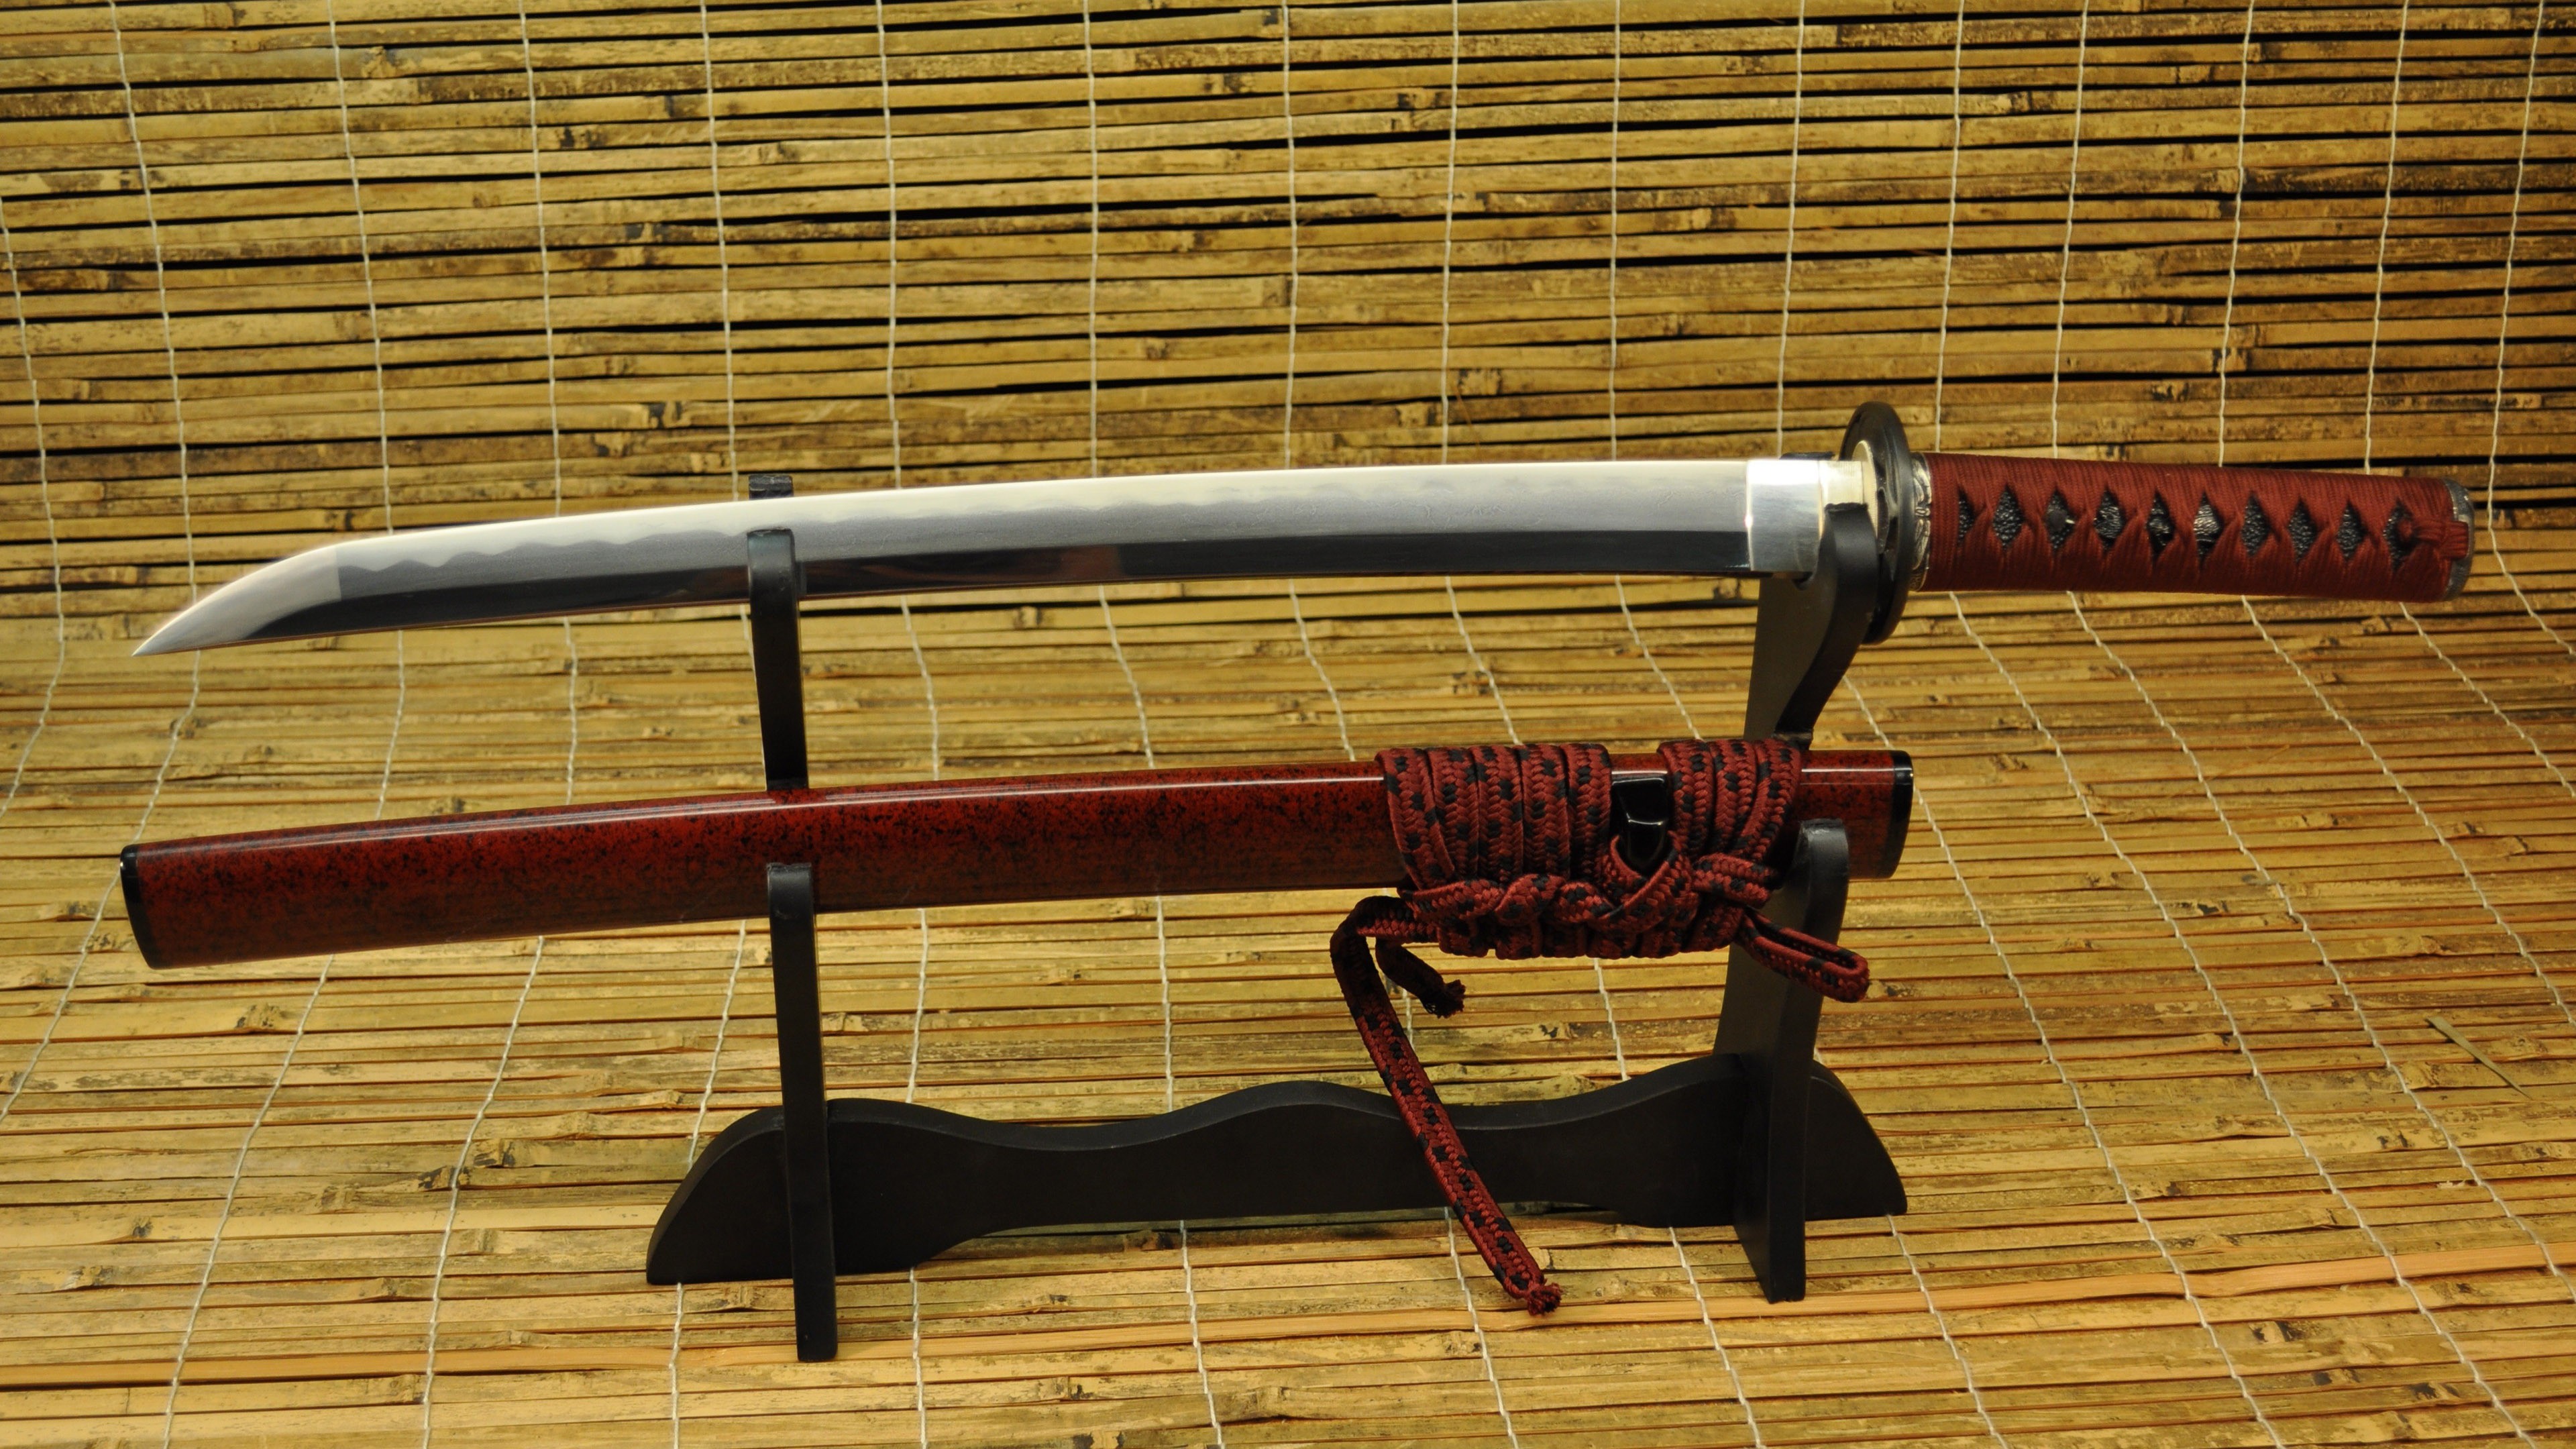 General 3840x2160 samurai sword Wazikashi